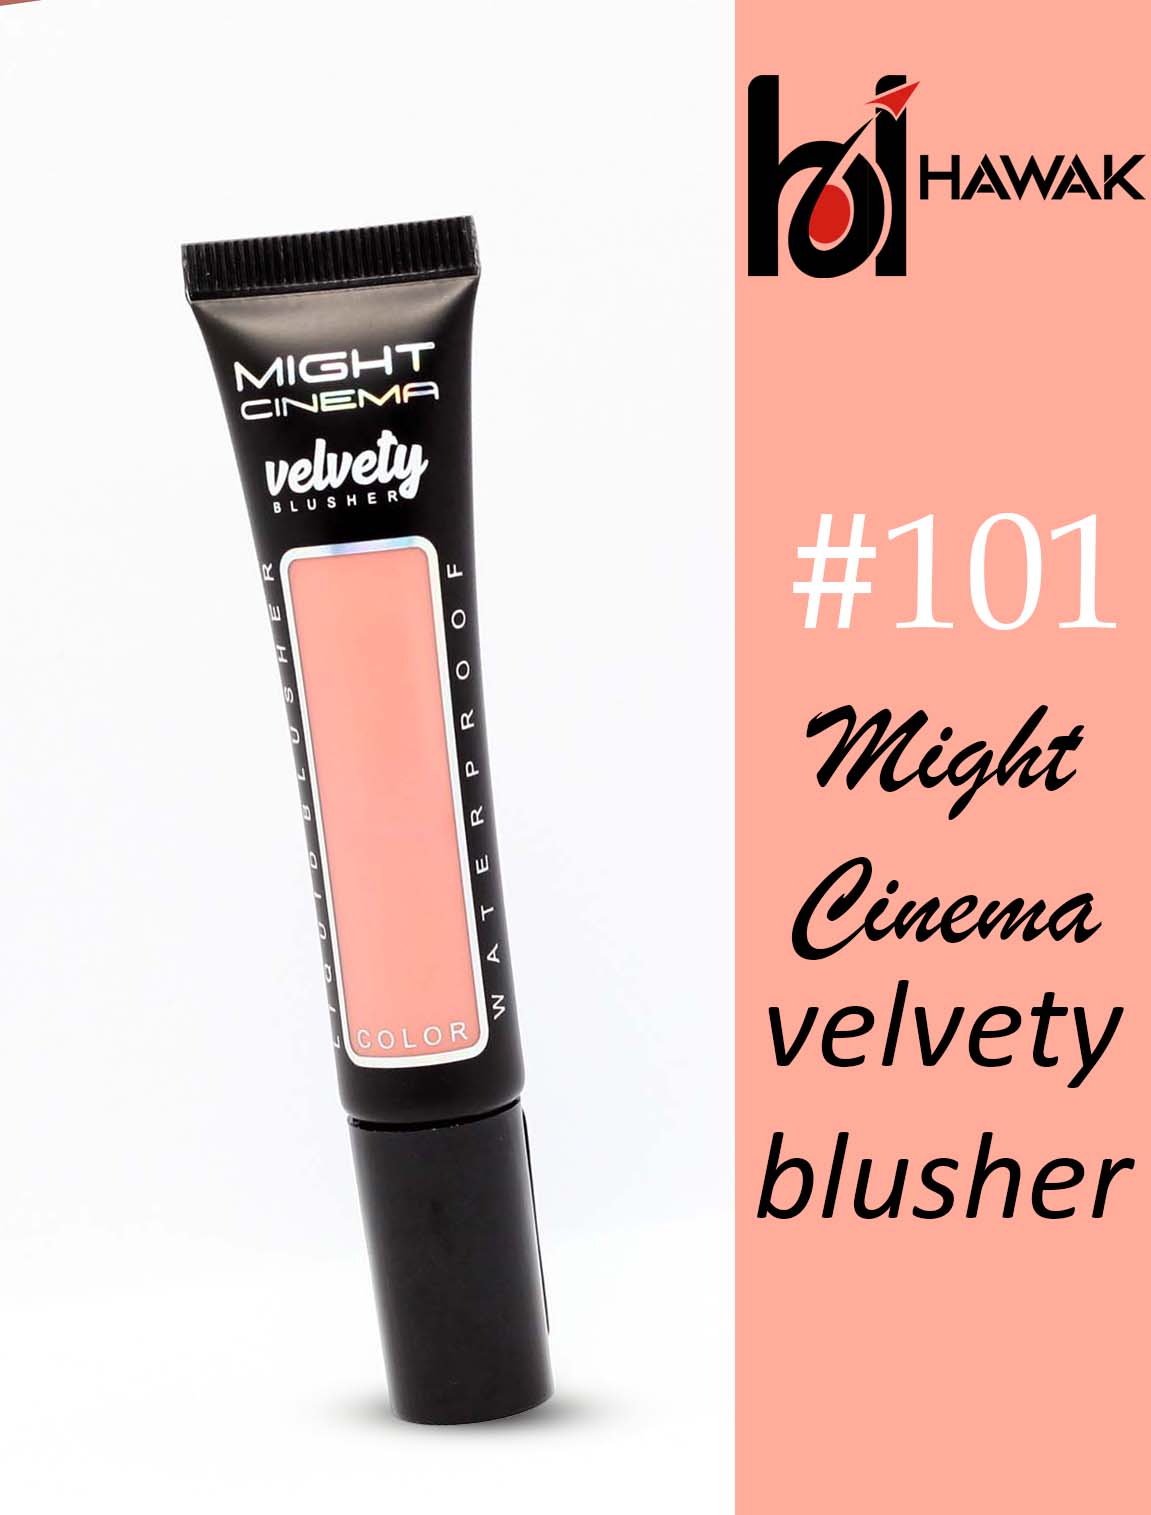 Velvety liquid blusher tube from Might Cinema